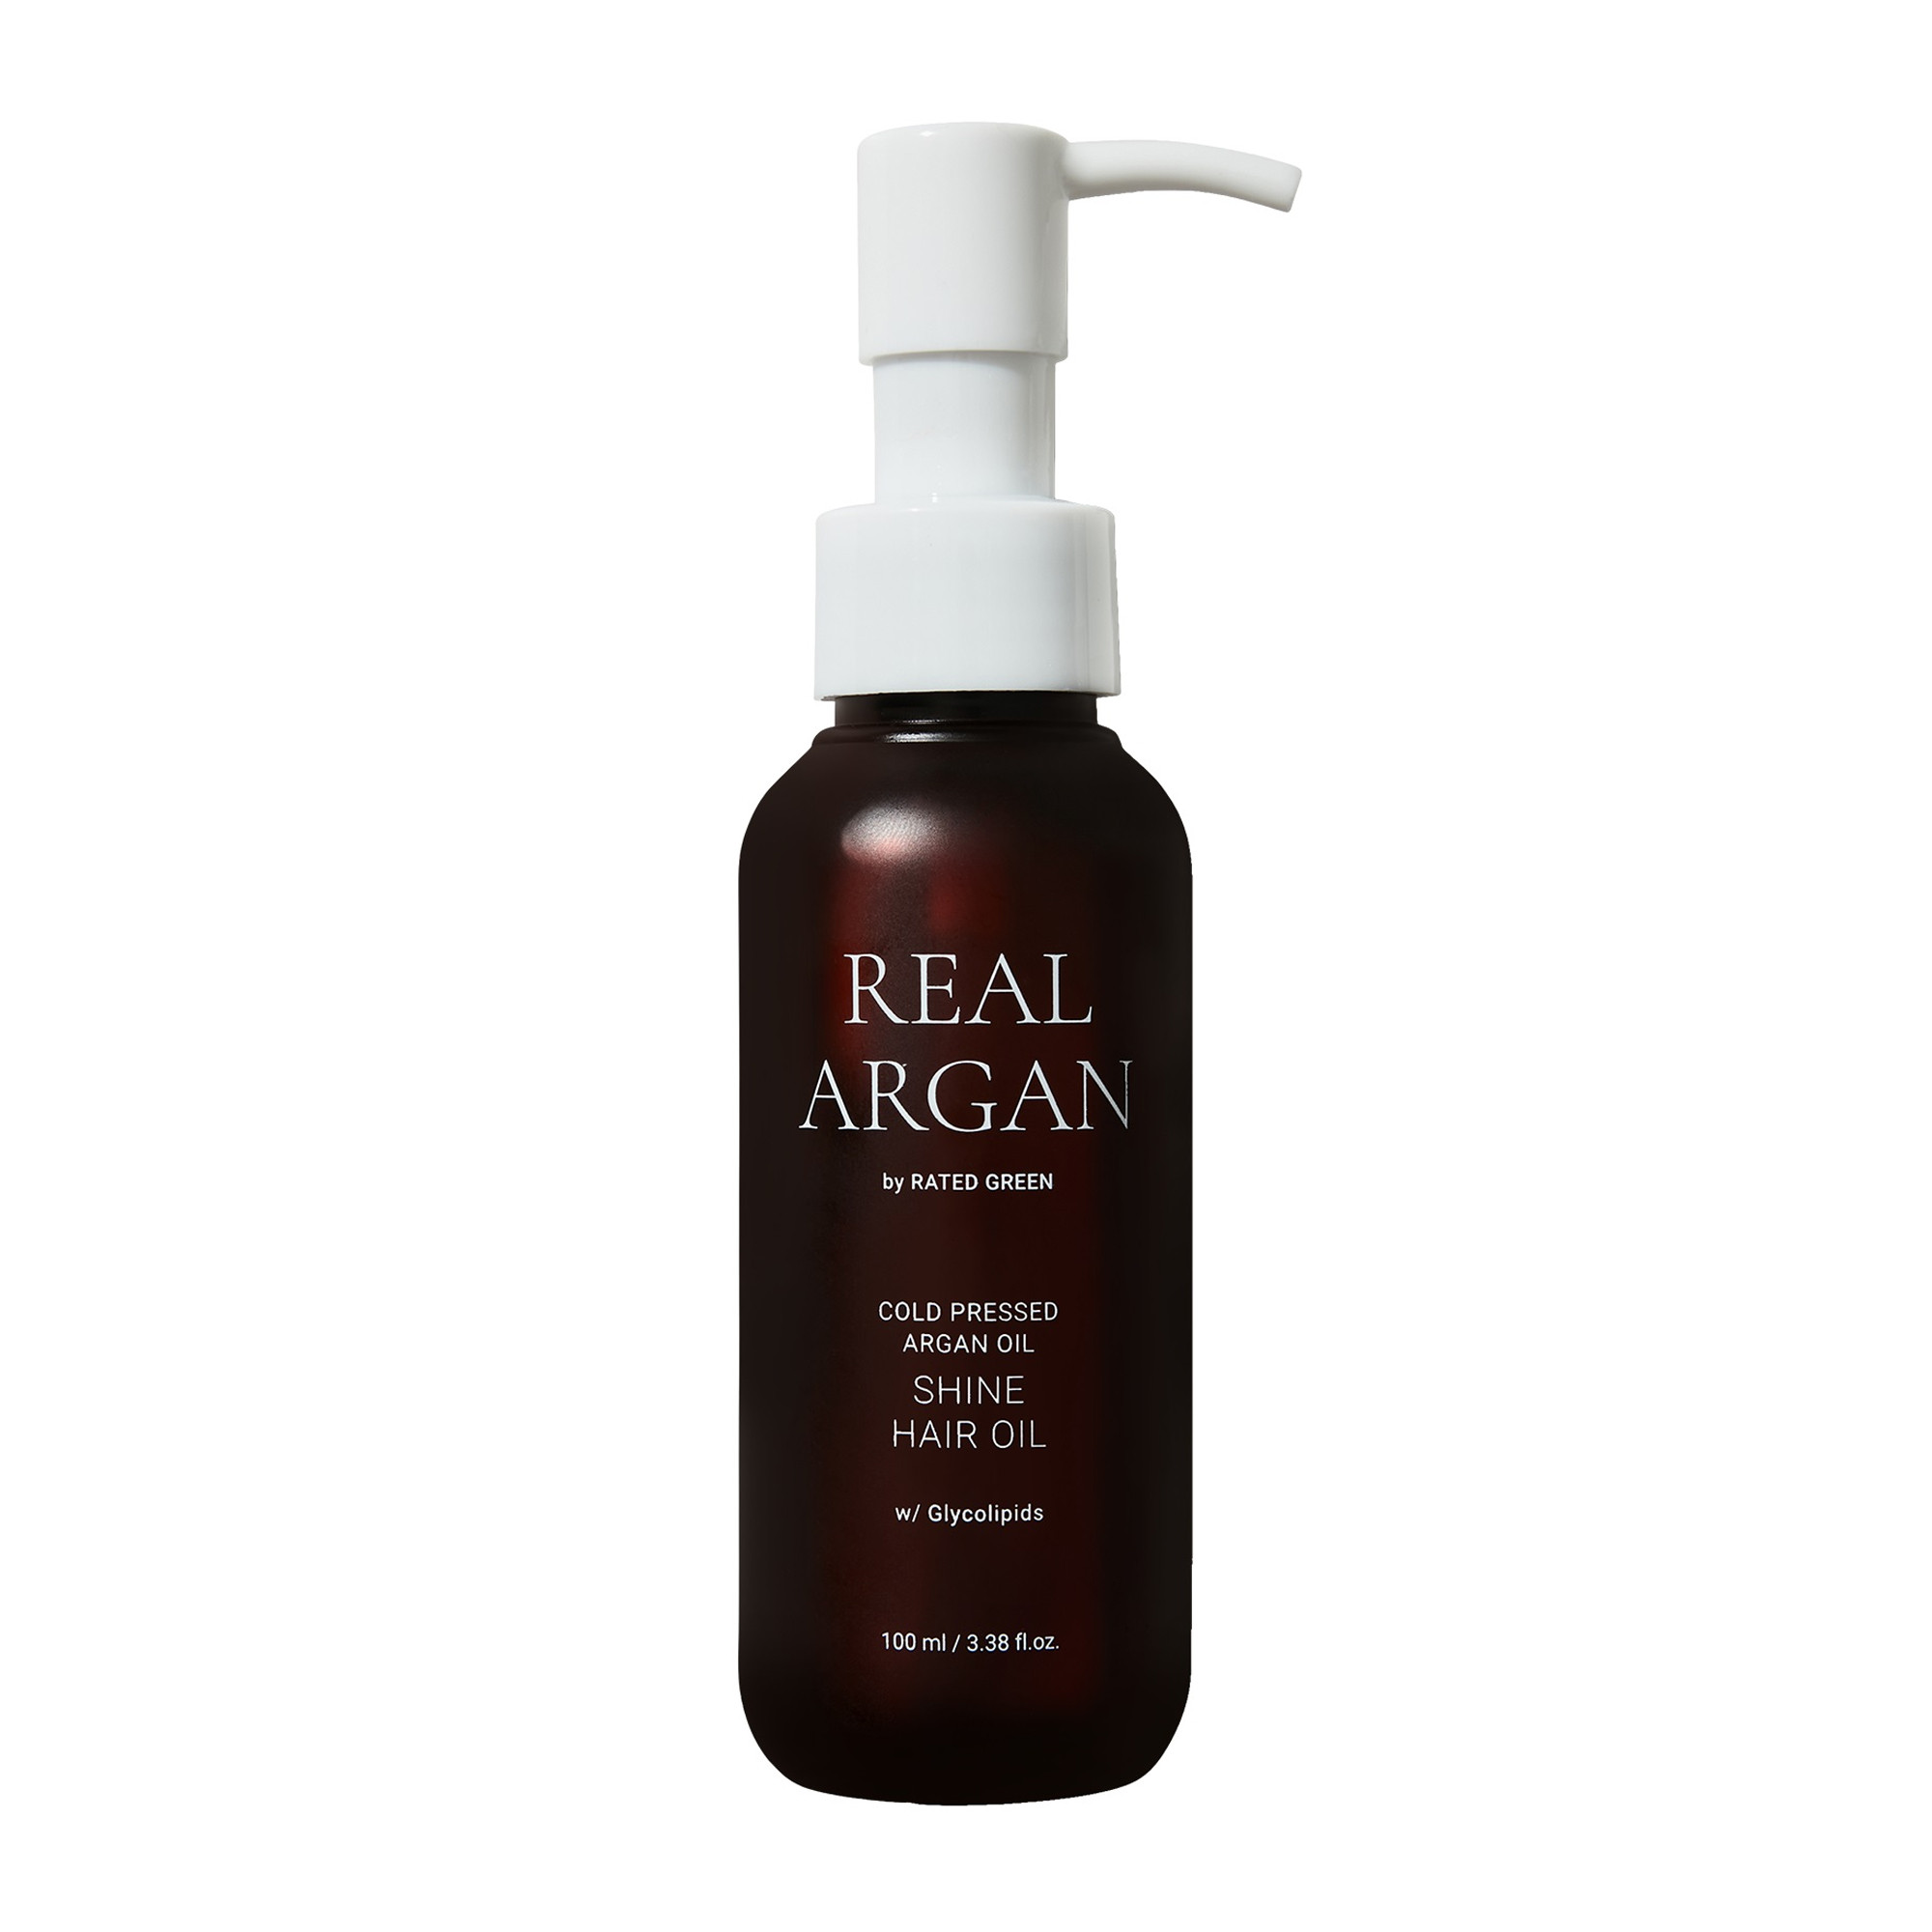 Аргановое масло для волос Rated Green Real Argan Shine Hair Oil